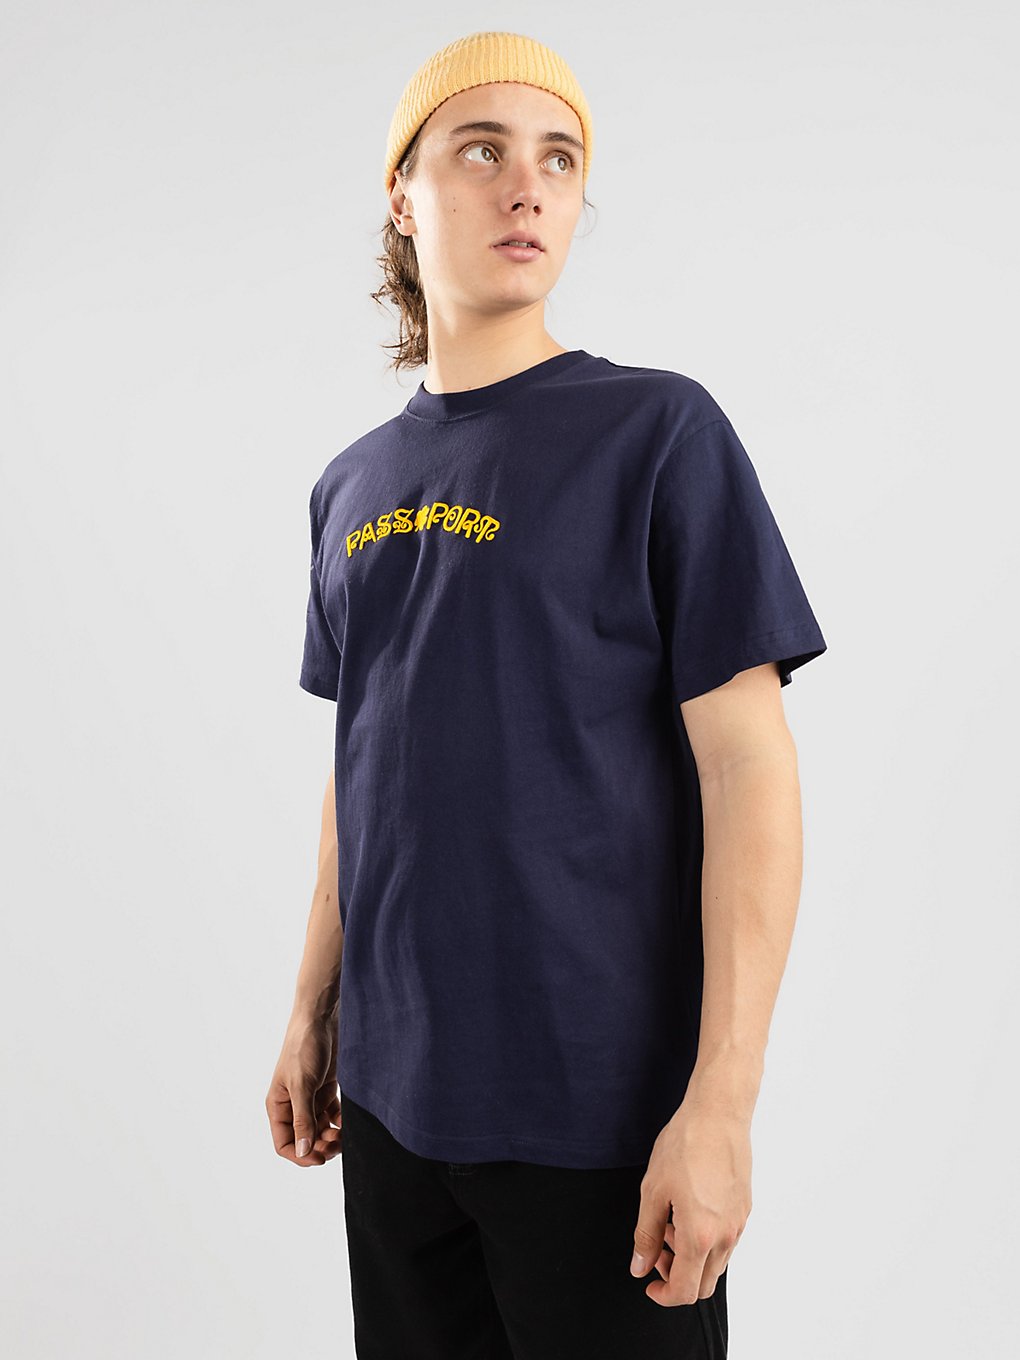 Pass Port Sham Embroidery T-Shirt navy kaufen